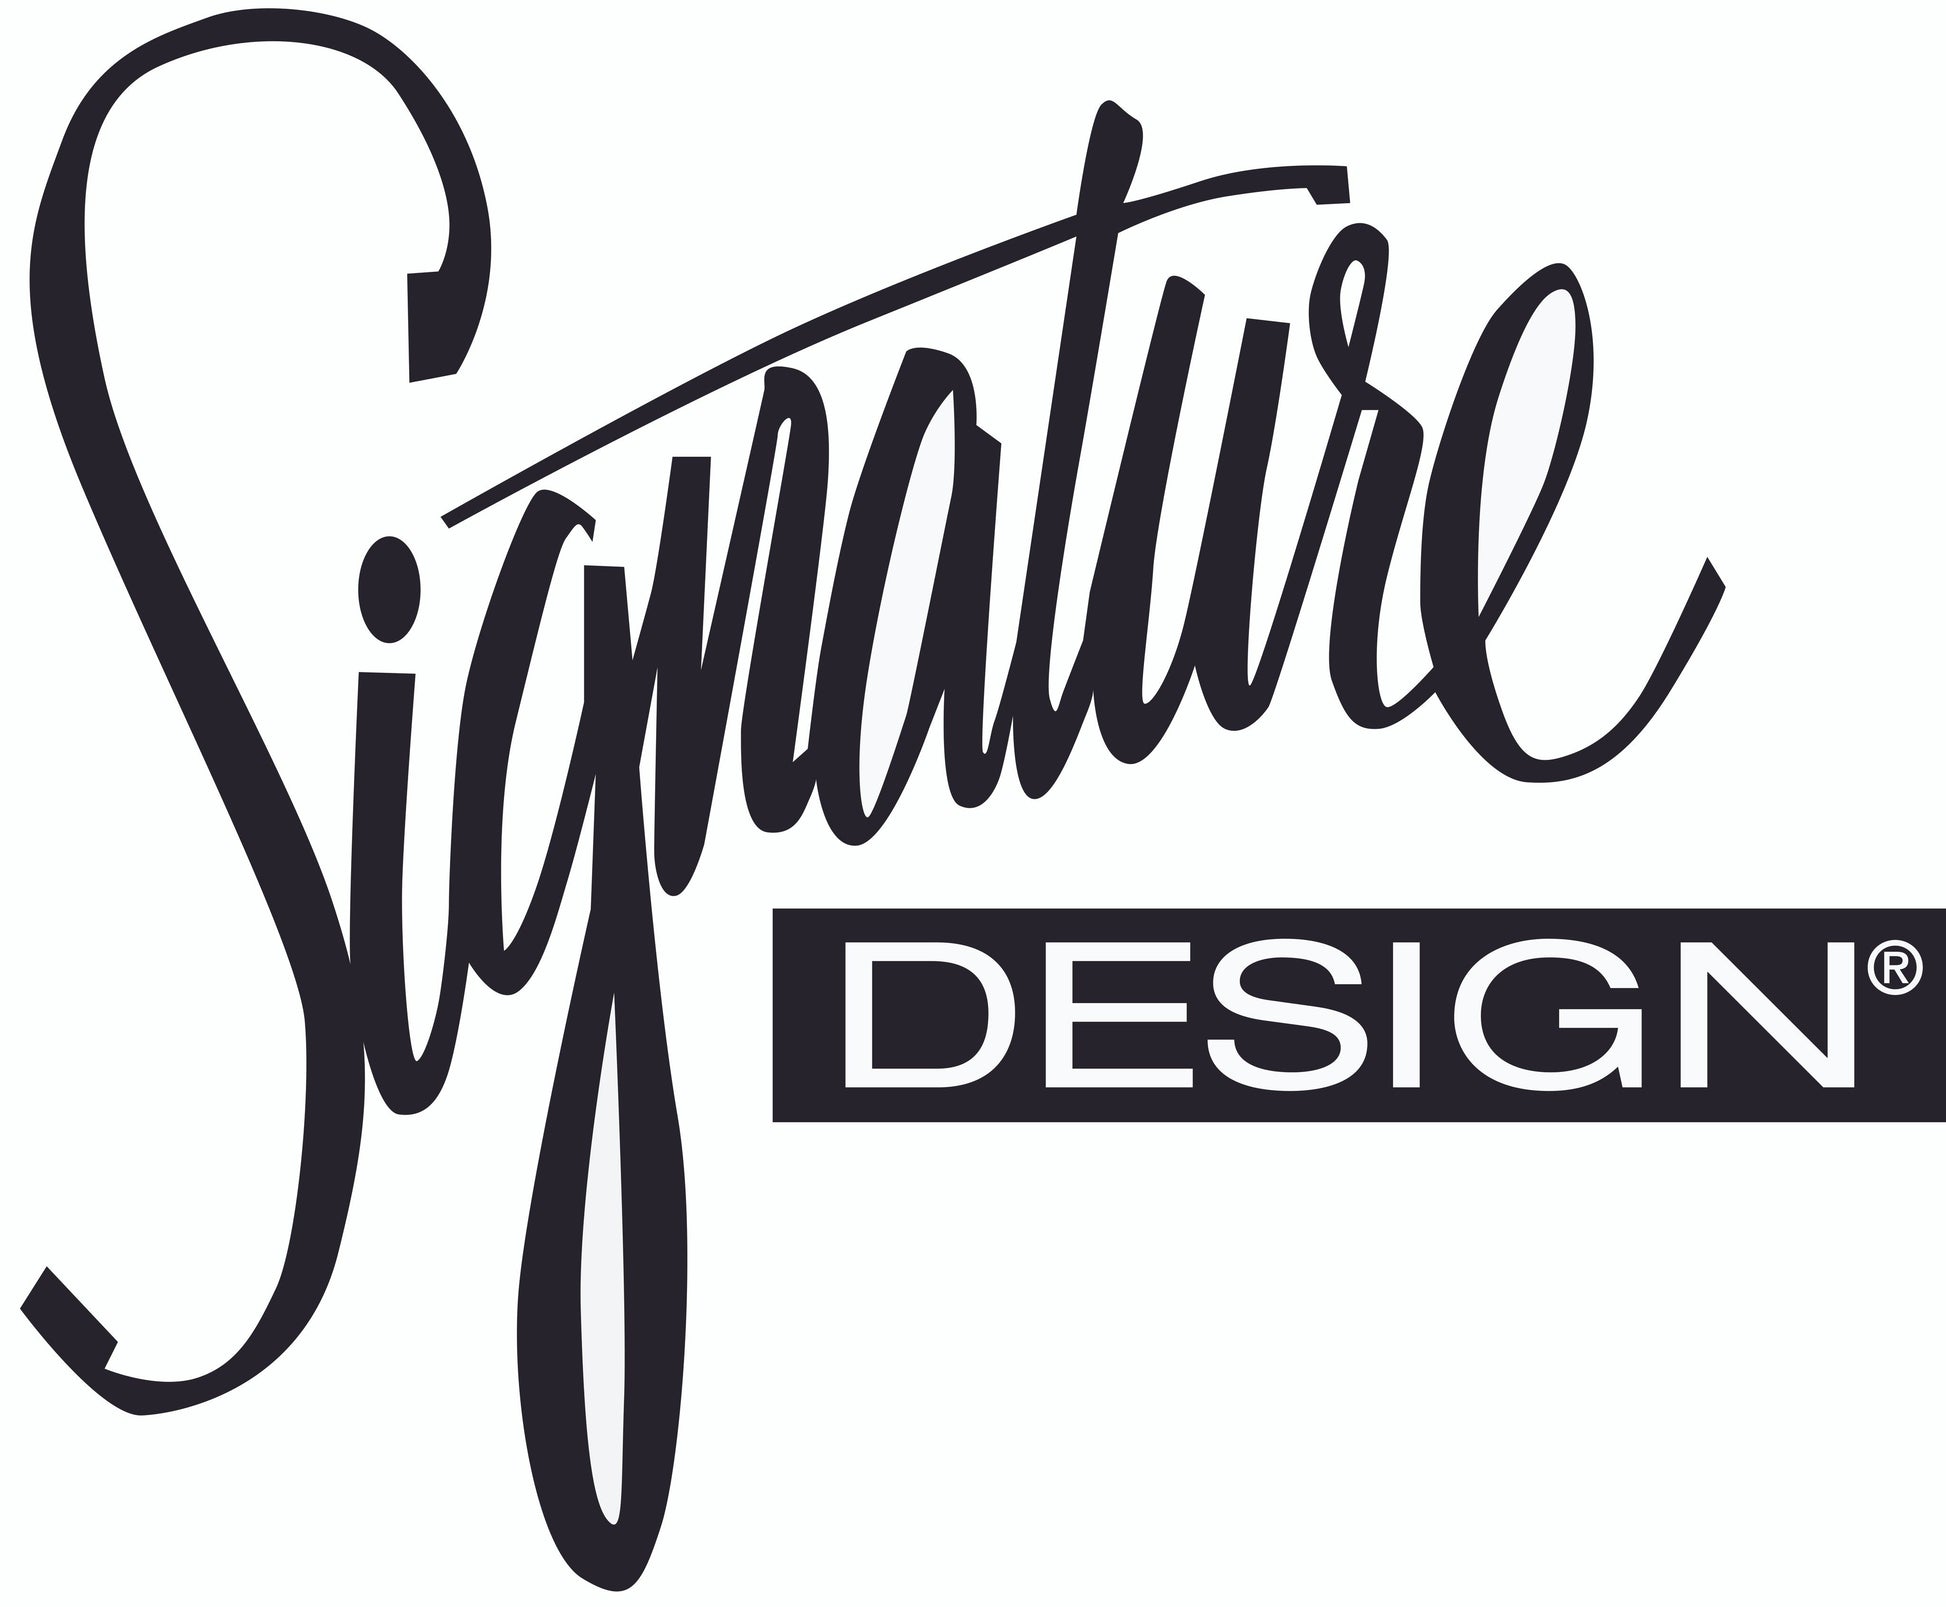 Maribel Dresser and Mirror Signature Design by Ashley®